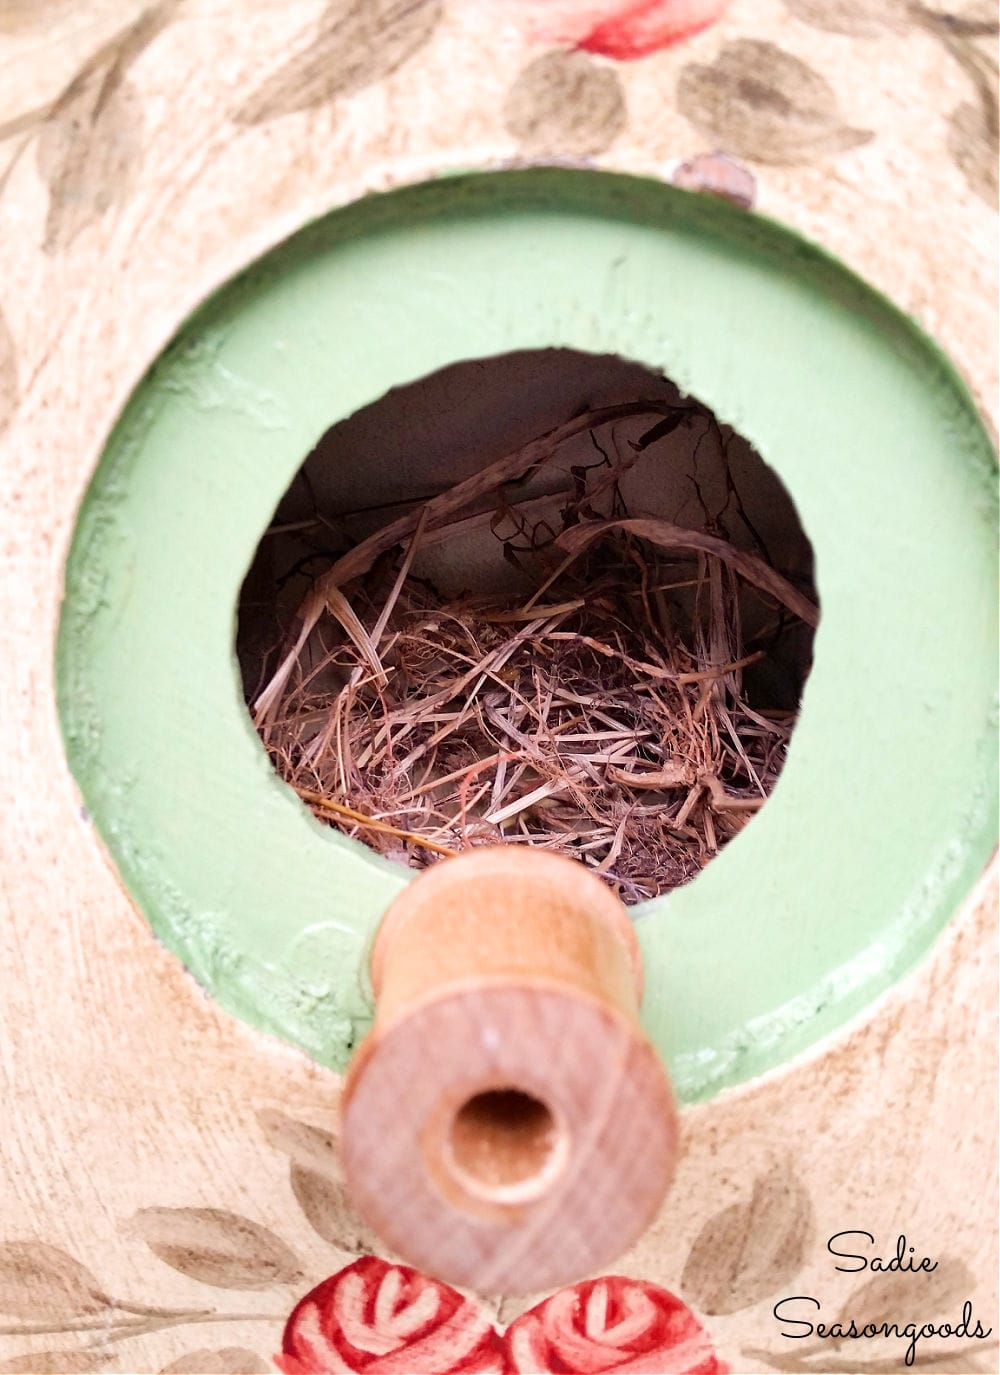 Nest inside a repurposed birdhouse